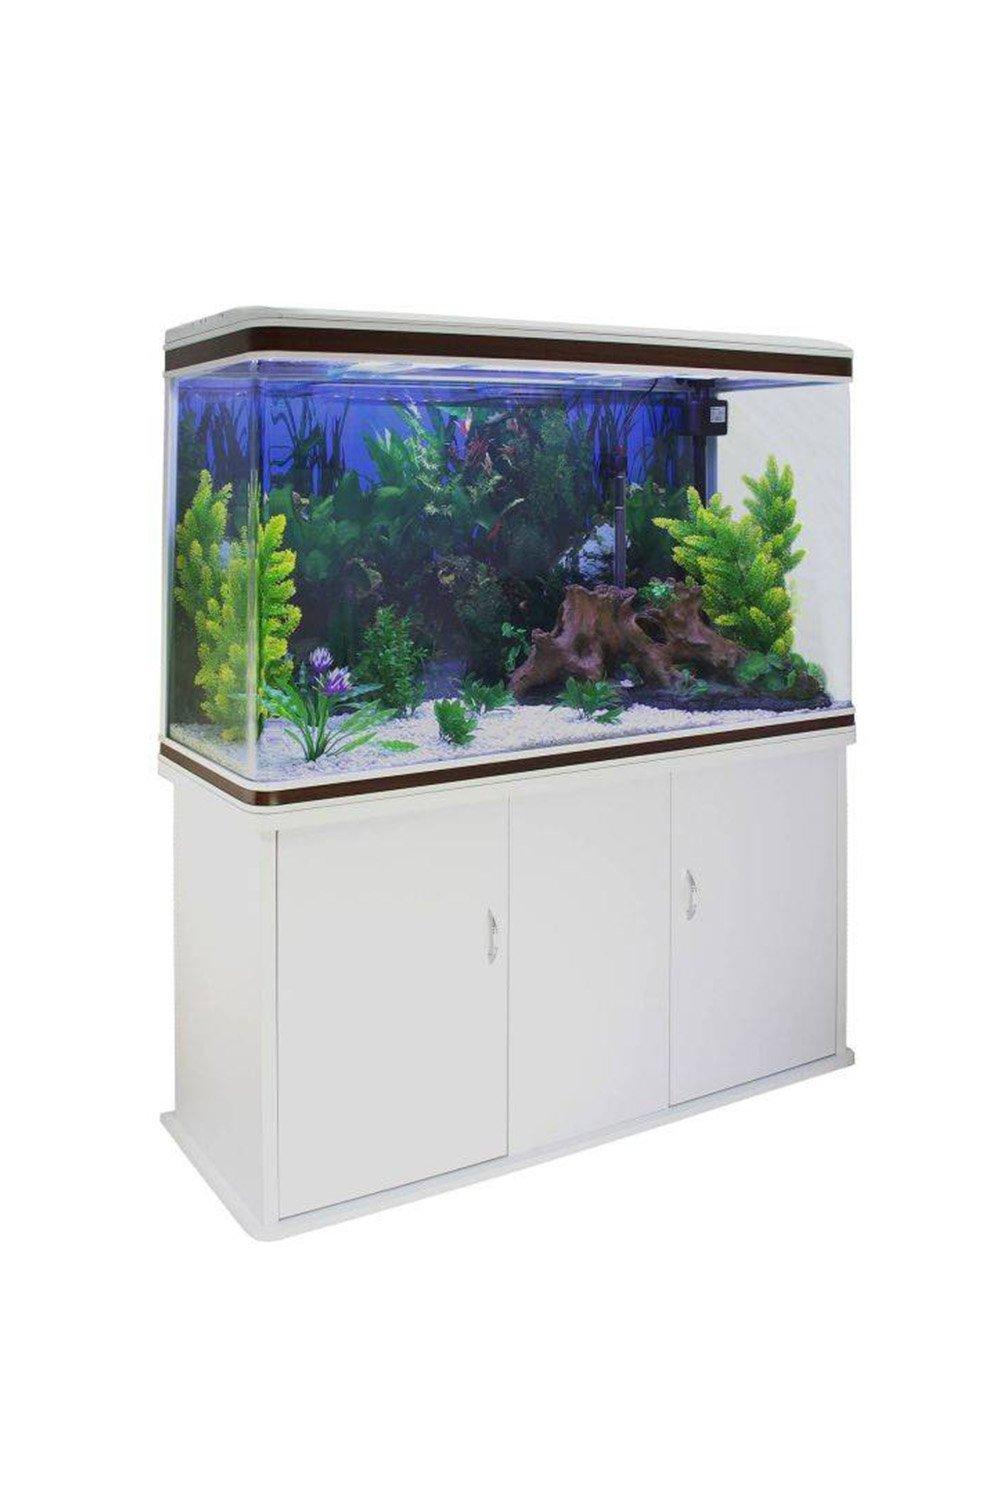 Aquarium Fish Tank & Cabinet with Complete Starter Kit - White Tank & White Gravel